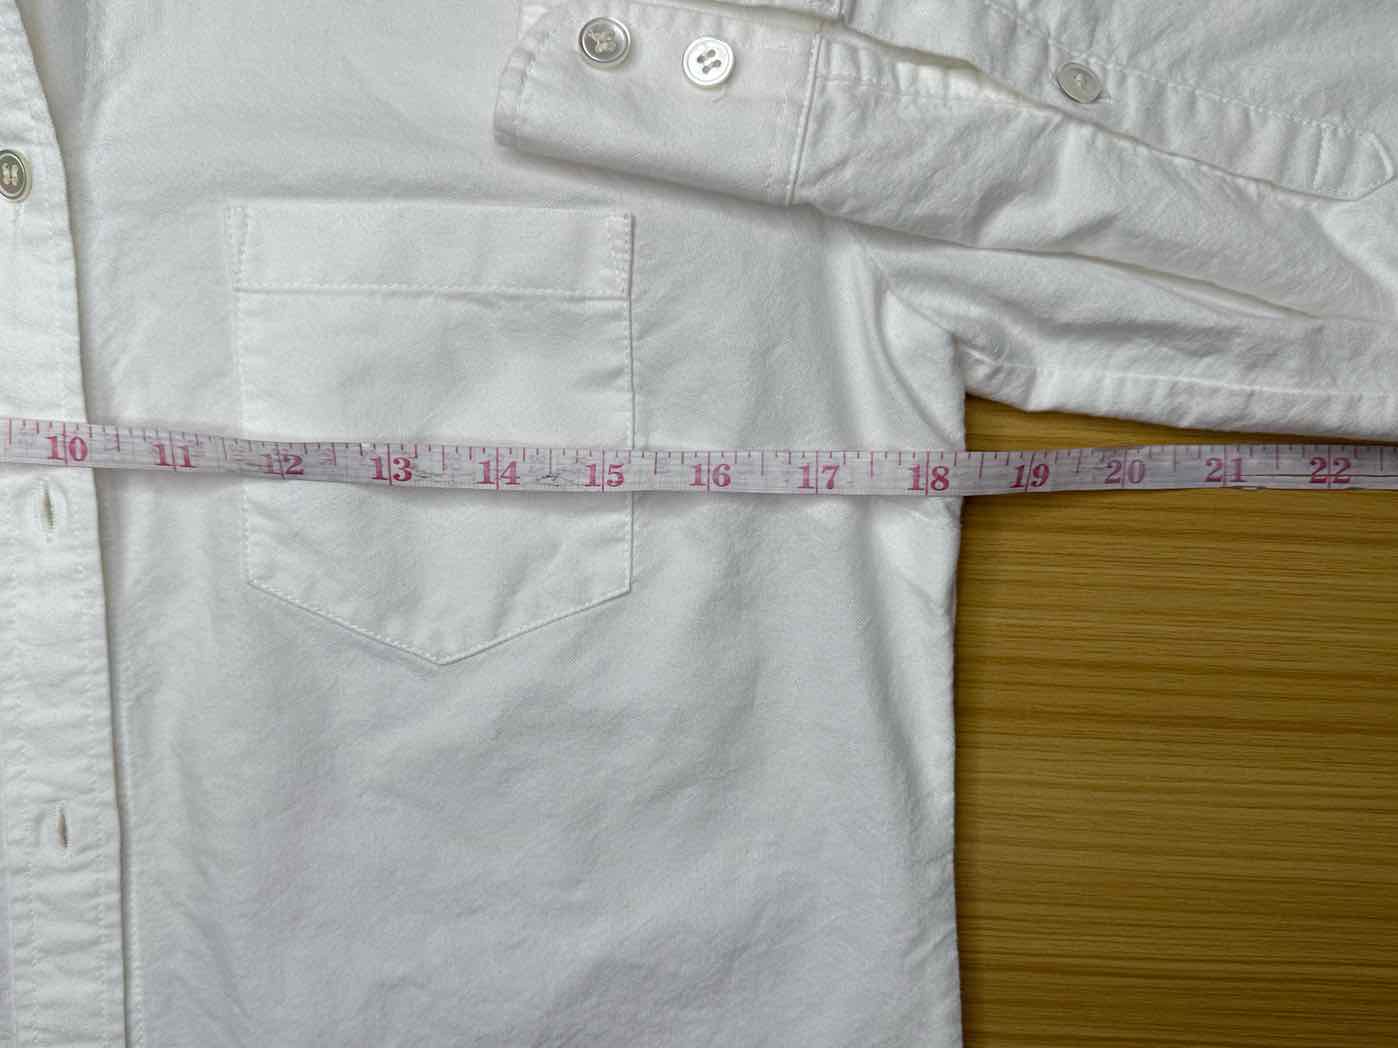 J. Crew White 100% Cotton Button-down Top Size 4